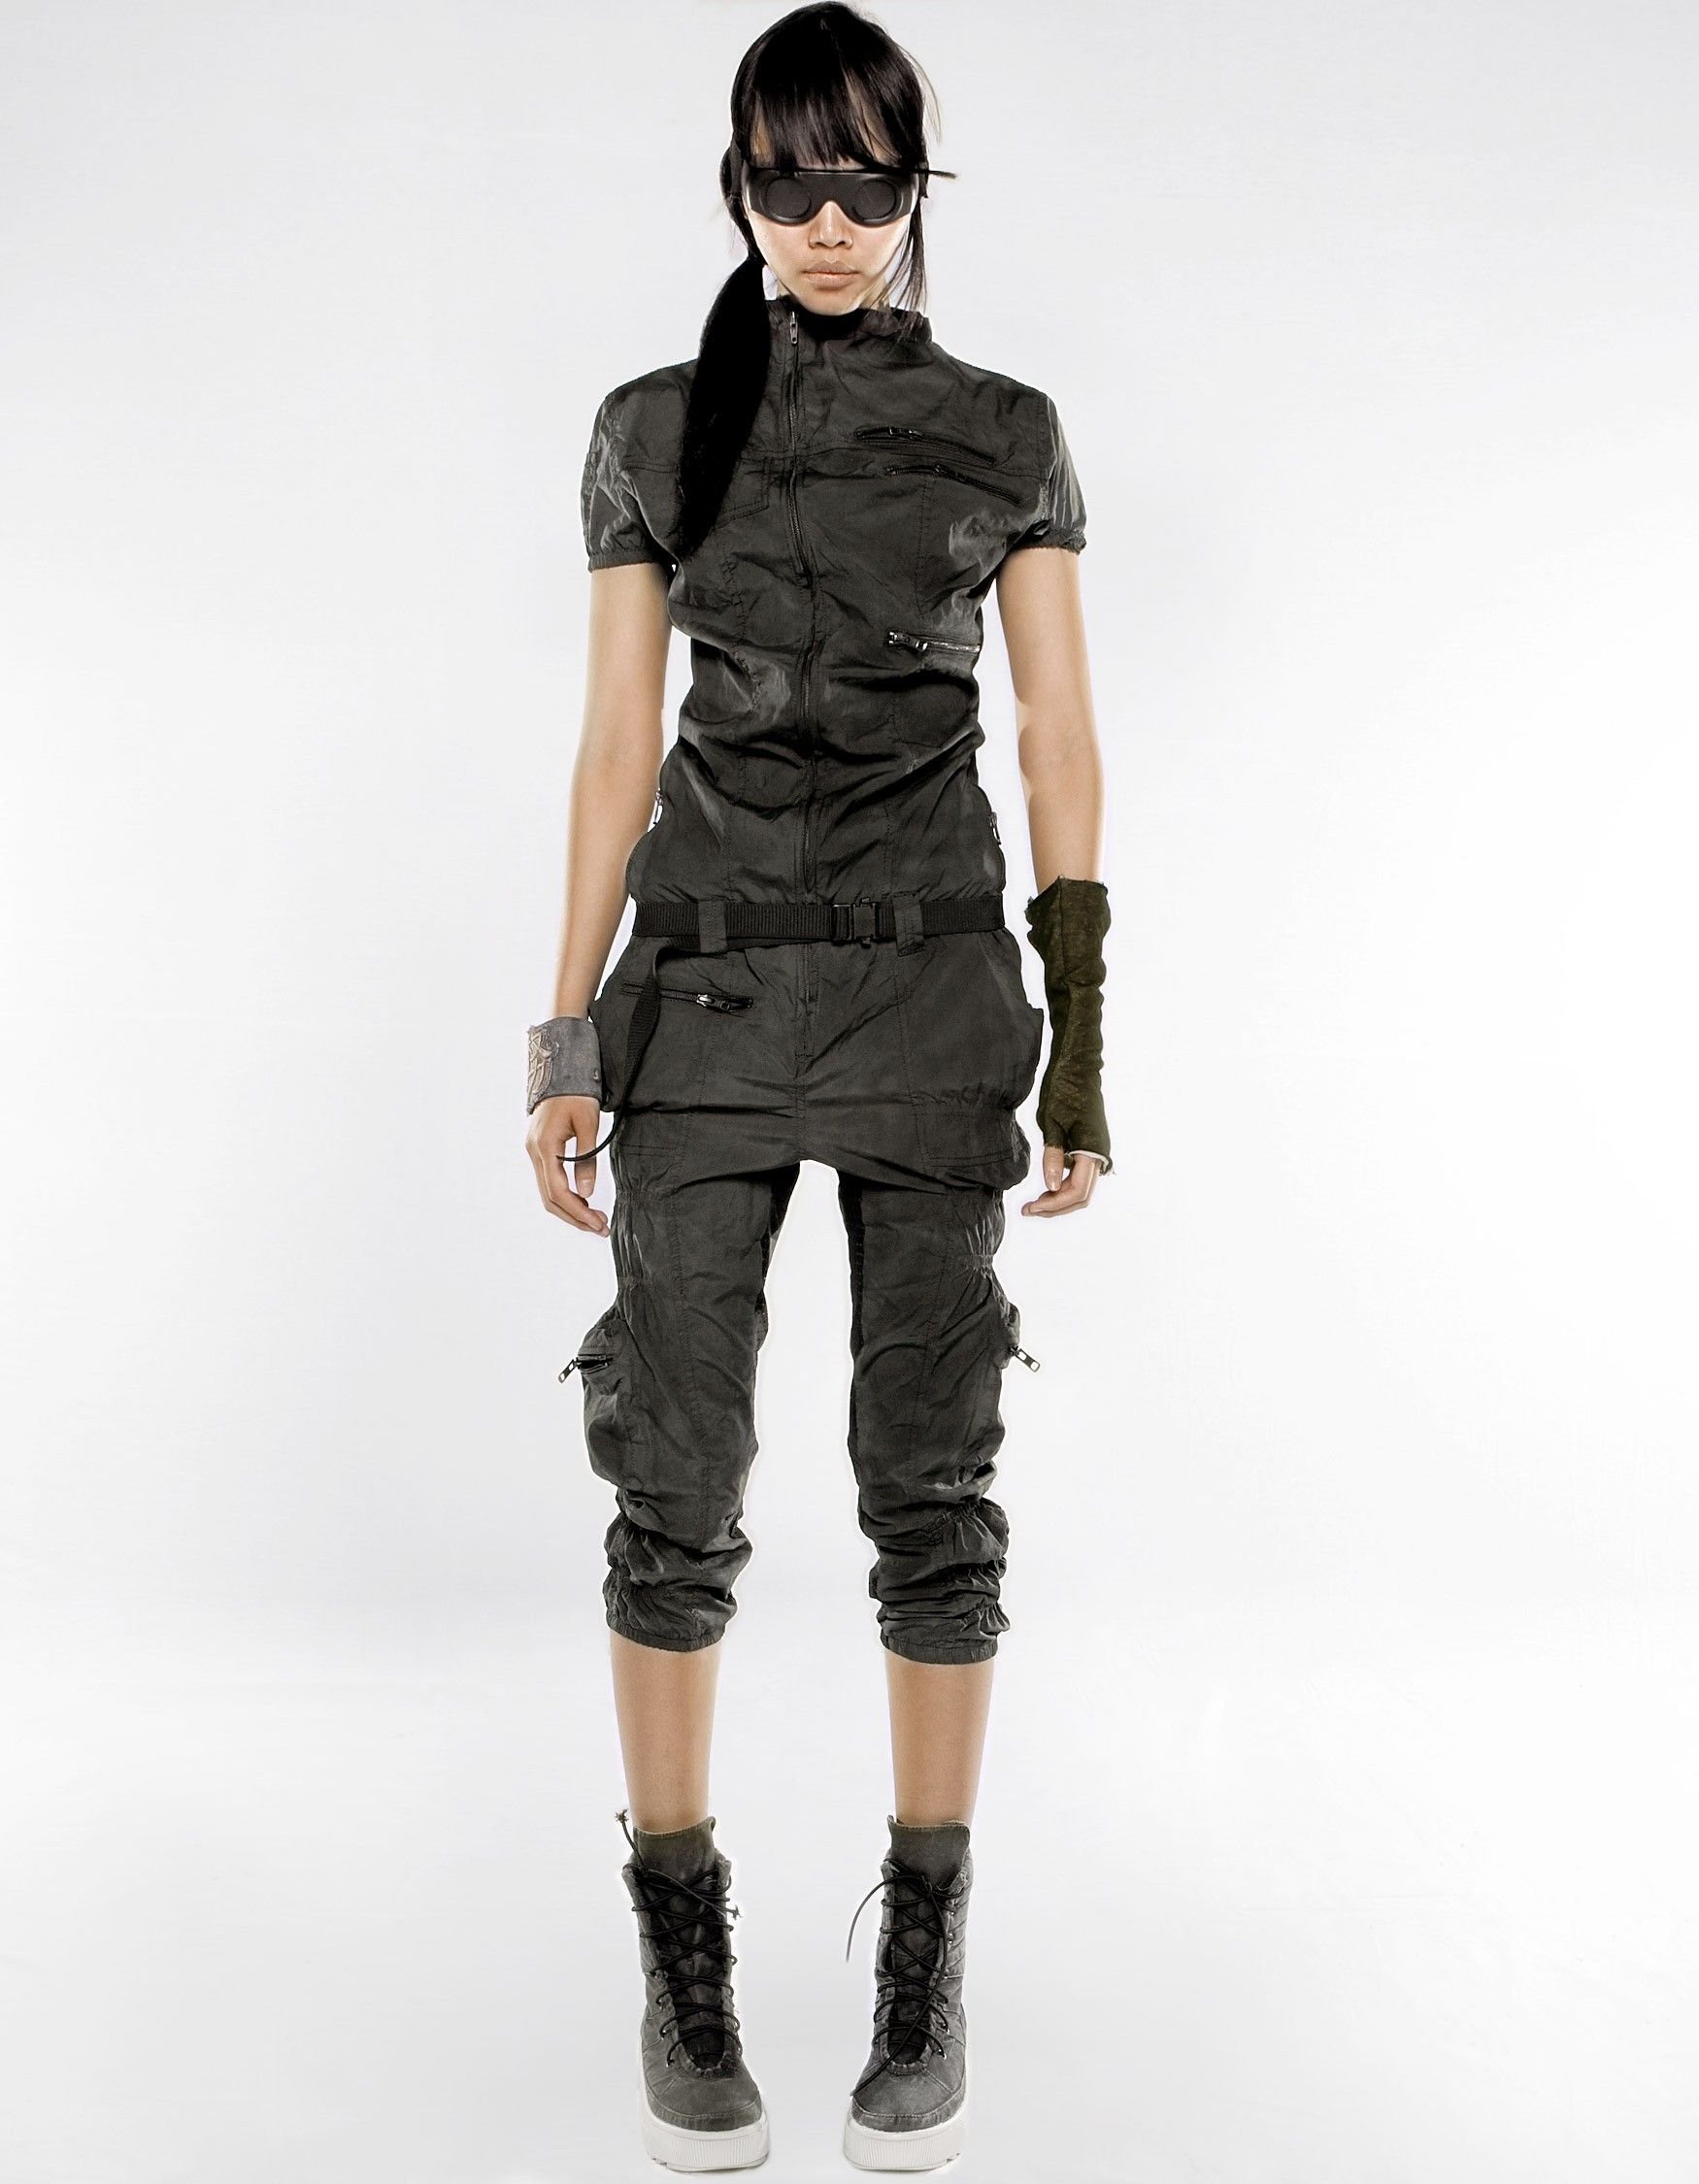 Cyberpunk clothes brands фото 42